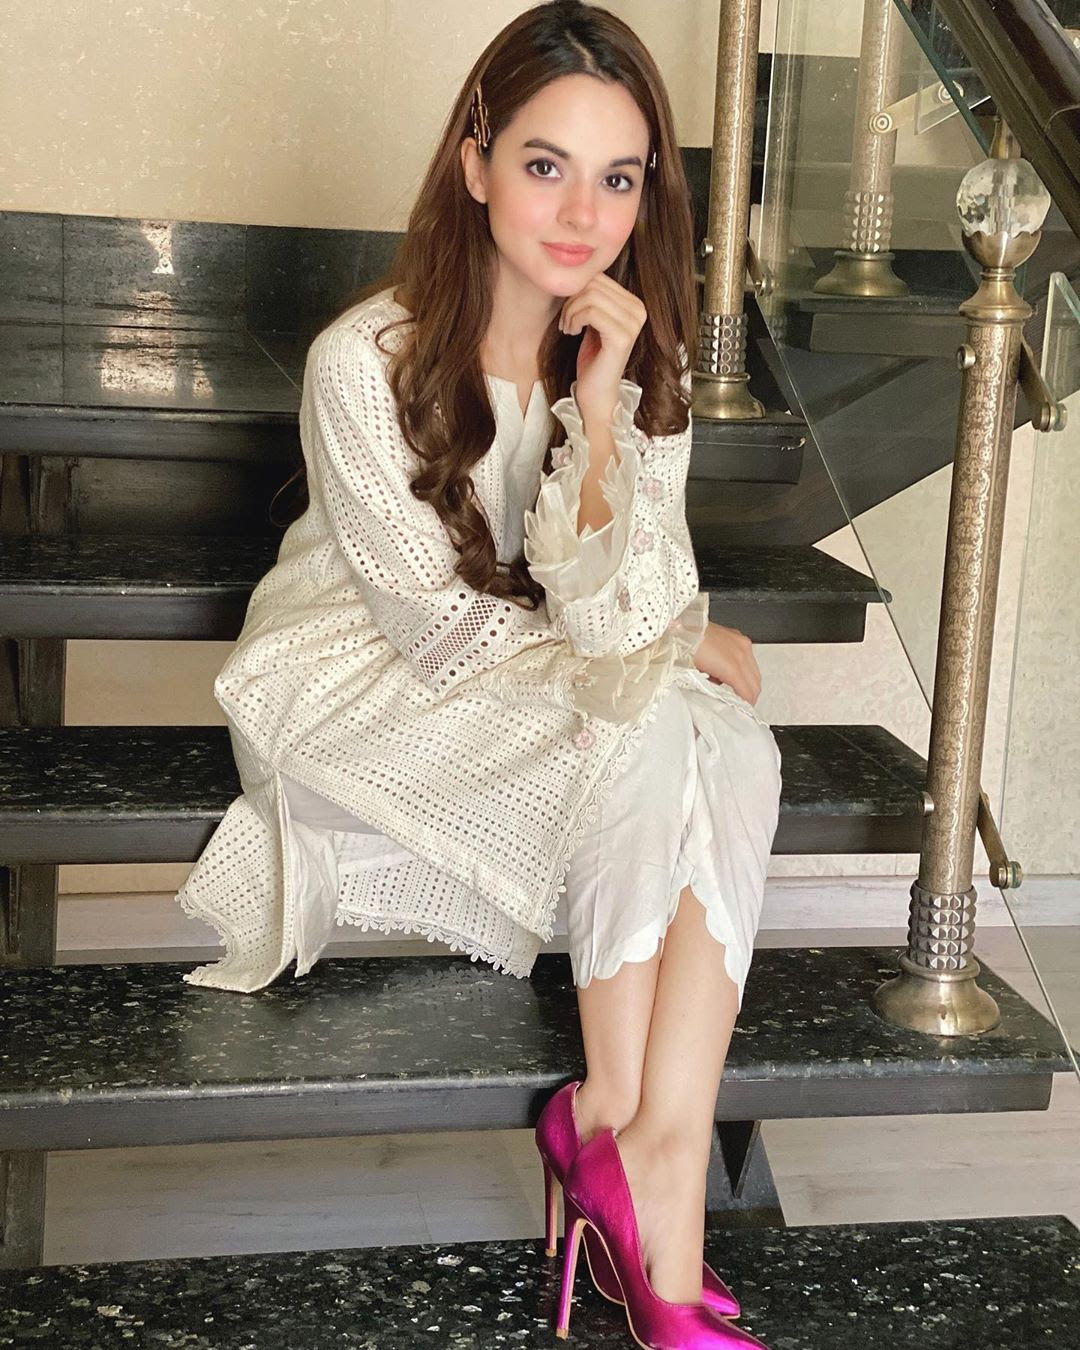 Maha hasan, komal meer, sidra batool interview host: Latest Beautiful Pictures Of Actress Komal Meer Pakistani Drama Celebrities